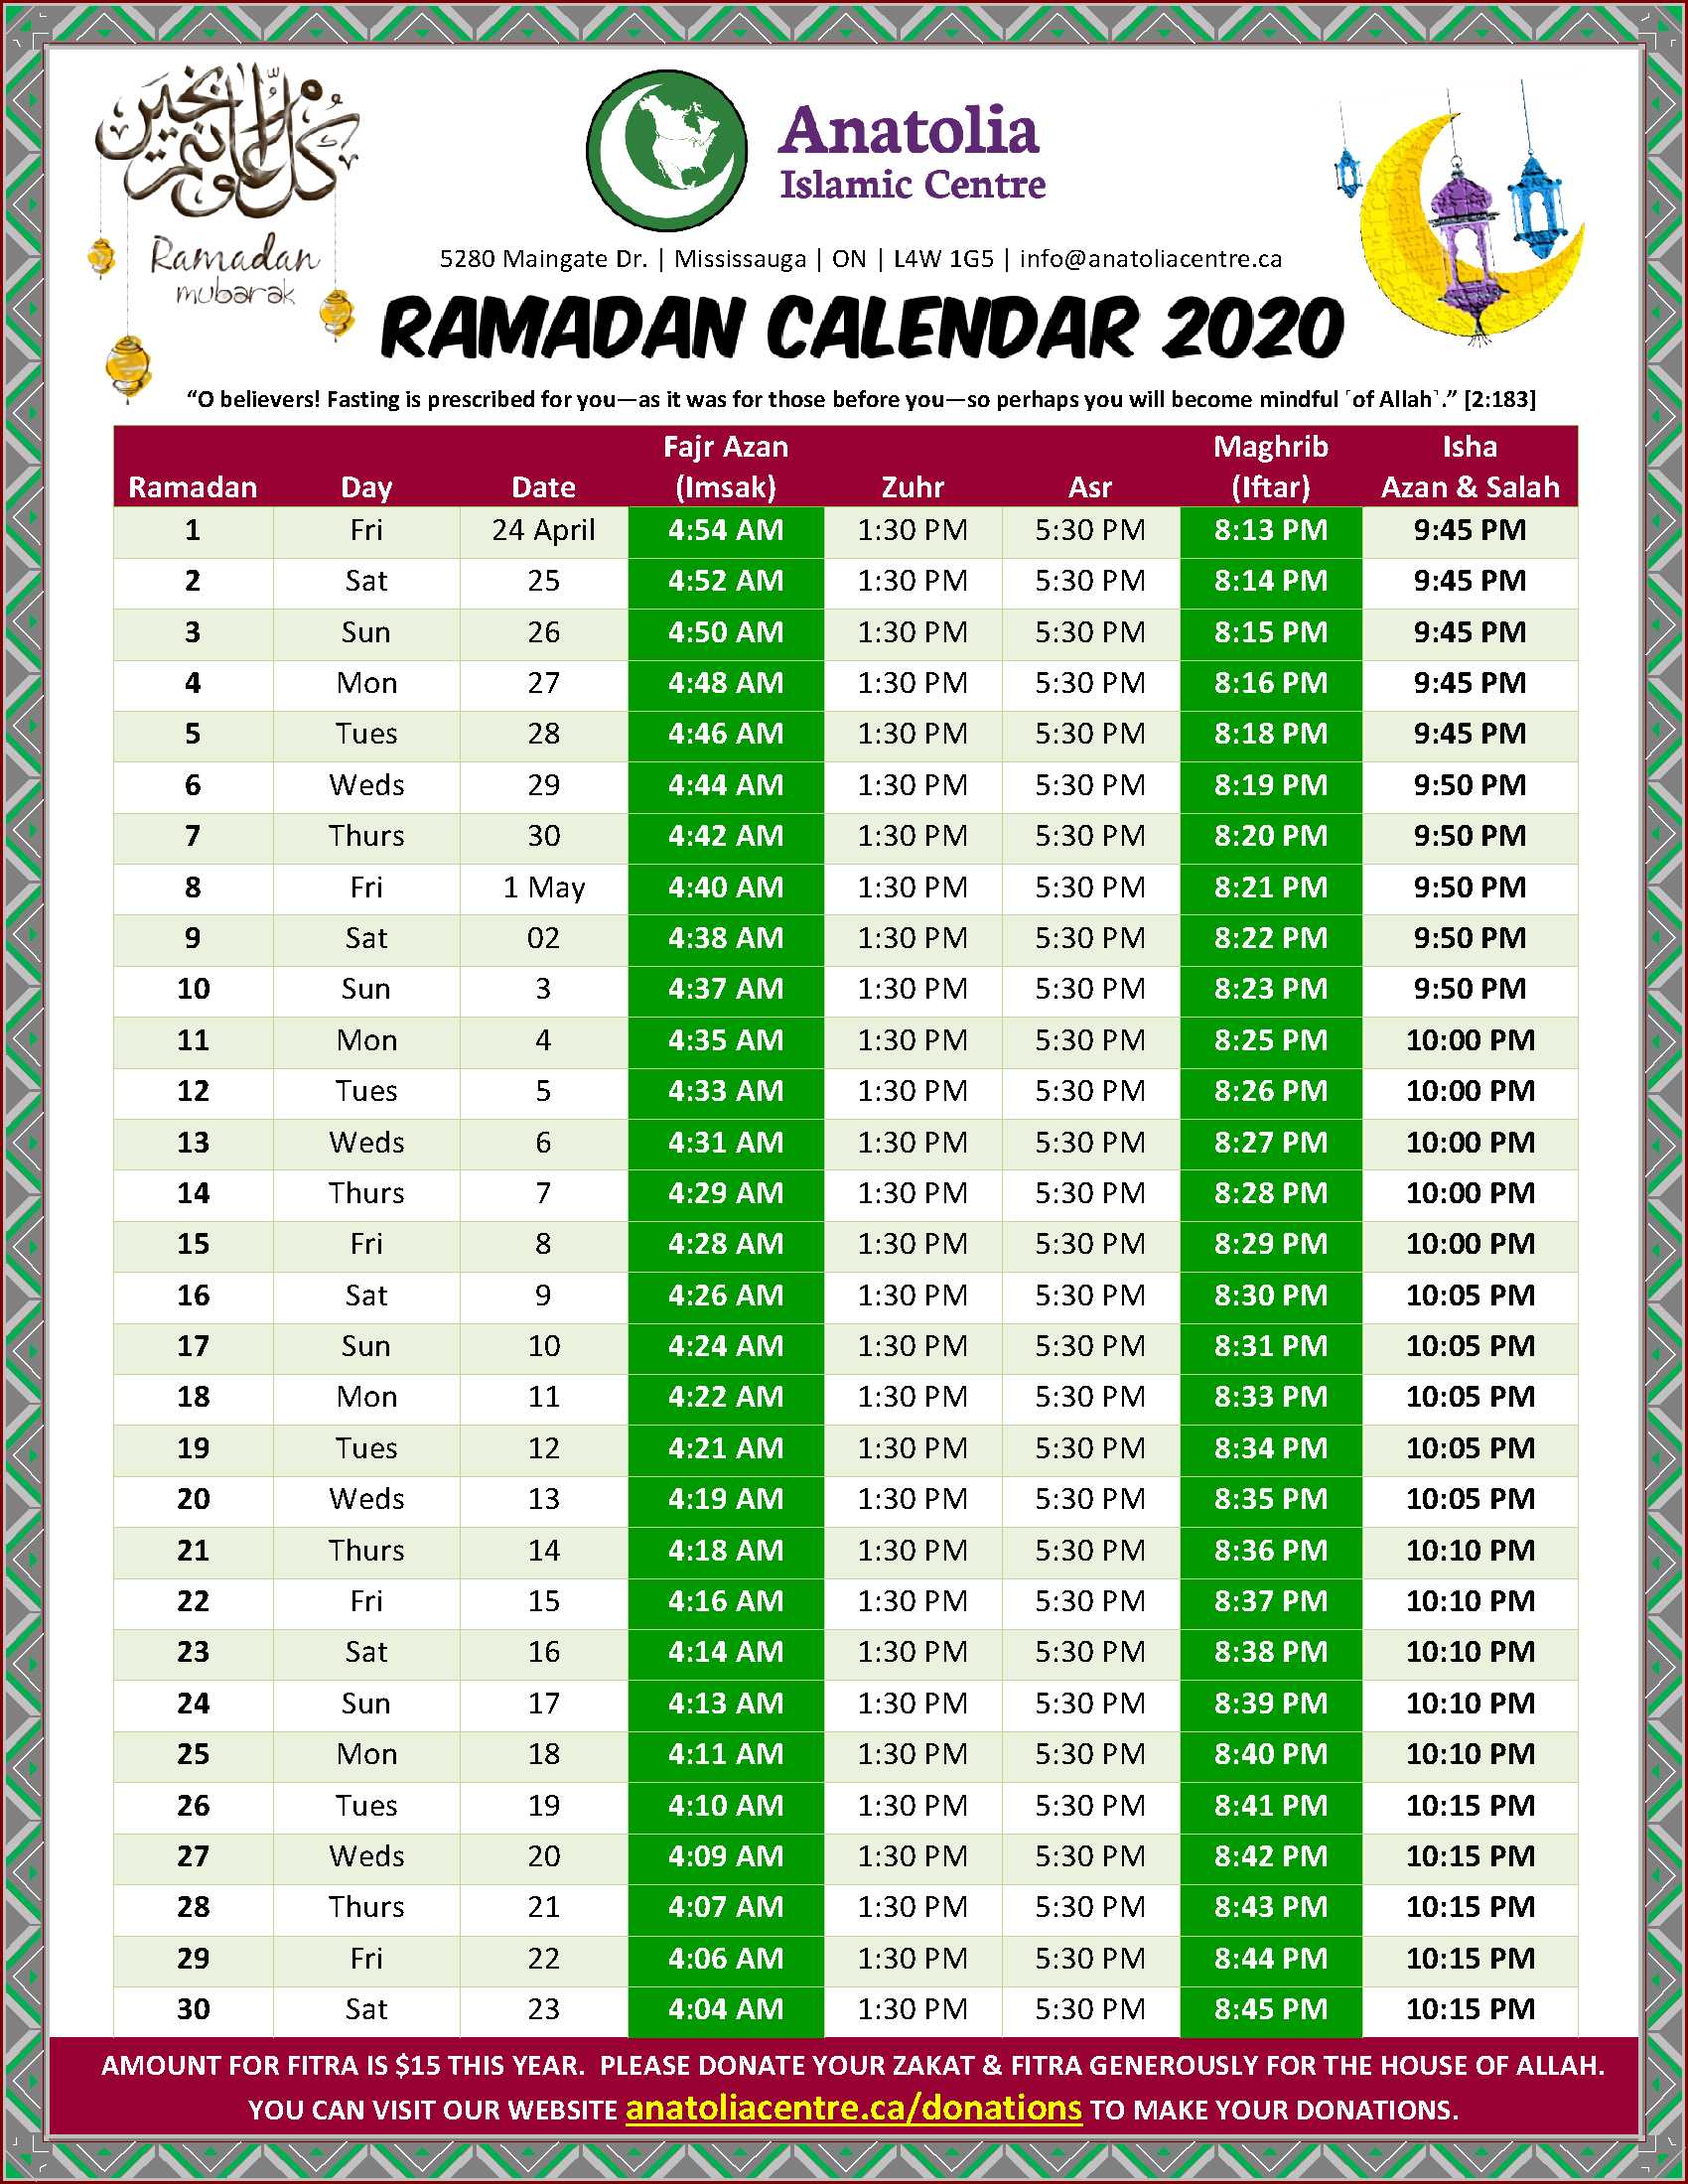 ramadan-calendar-2020-anatolia-islamic-centre